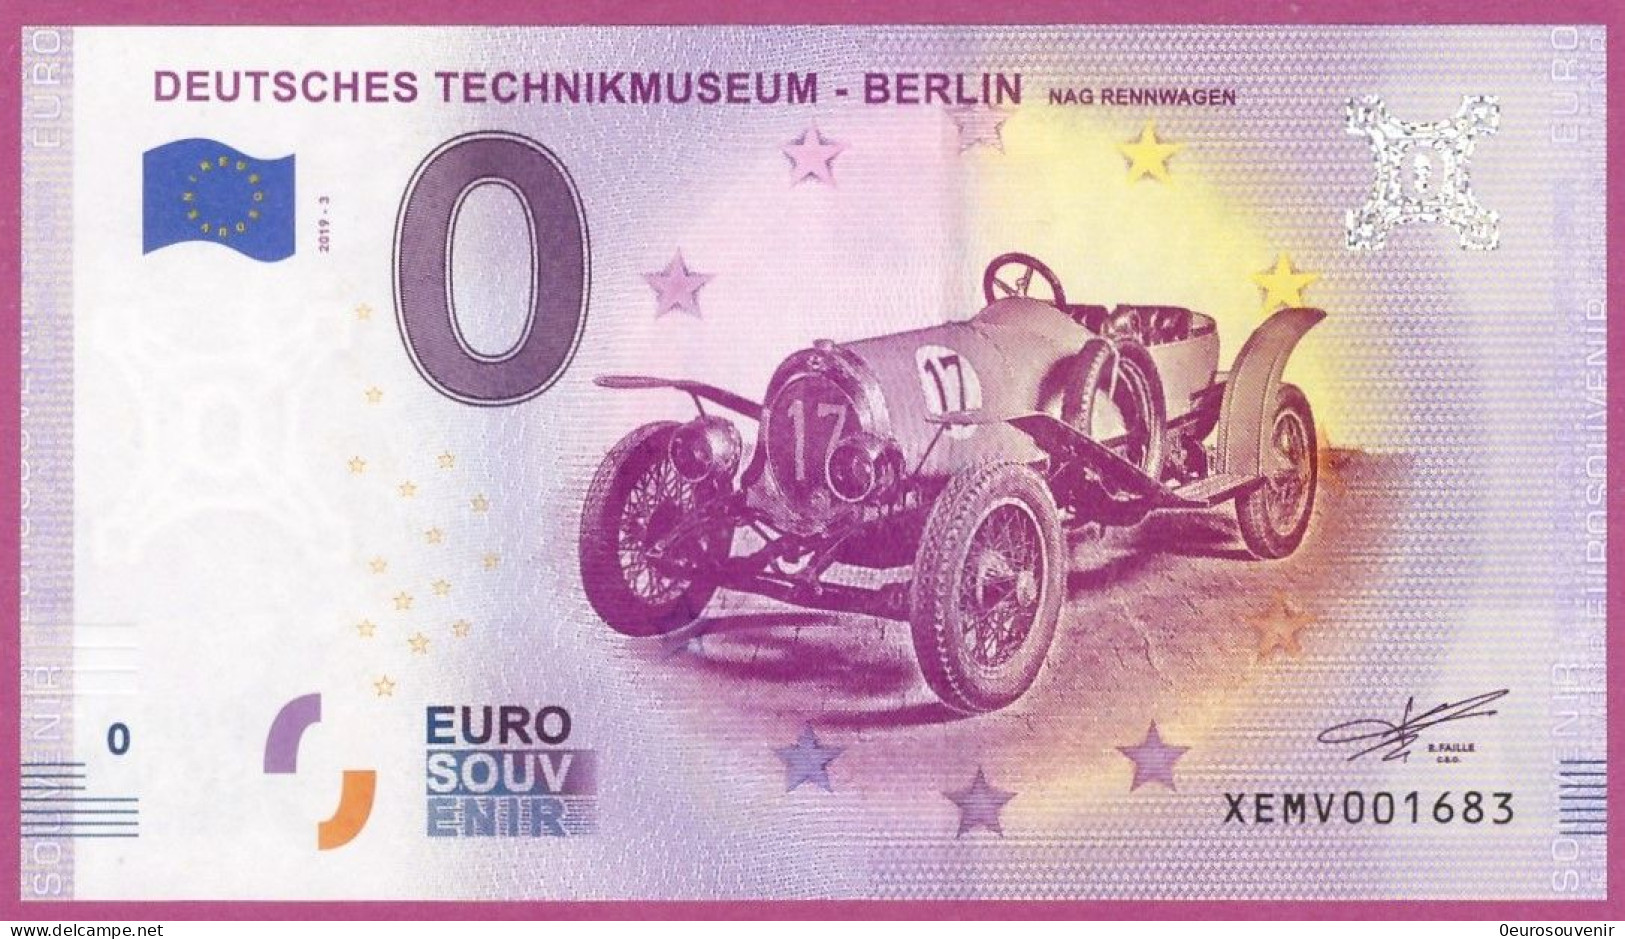 0-Euro XEMV 03 2019 DEUTSCHES TECHNIKMUSEUM - BERLIN - NAG RENNWAGEN - Private Proofs / Unofficial